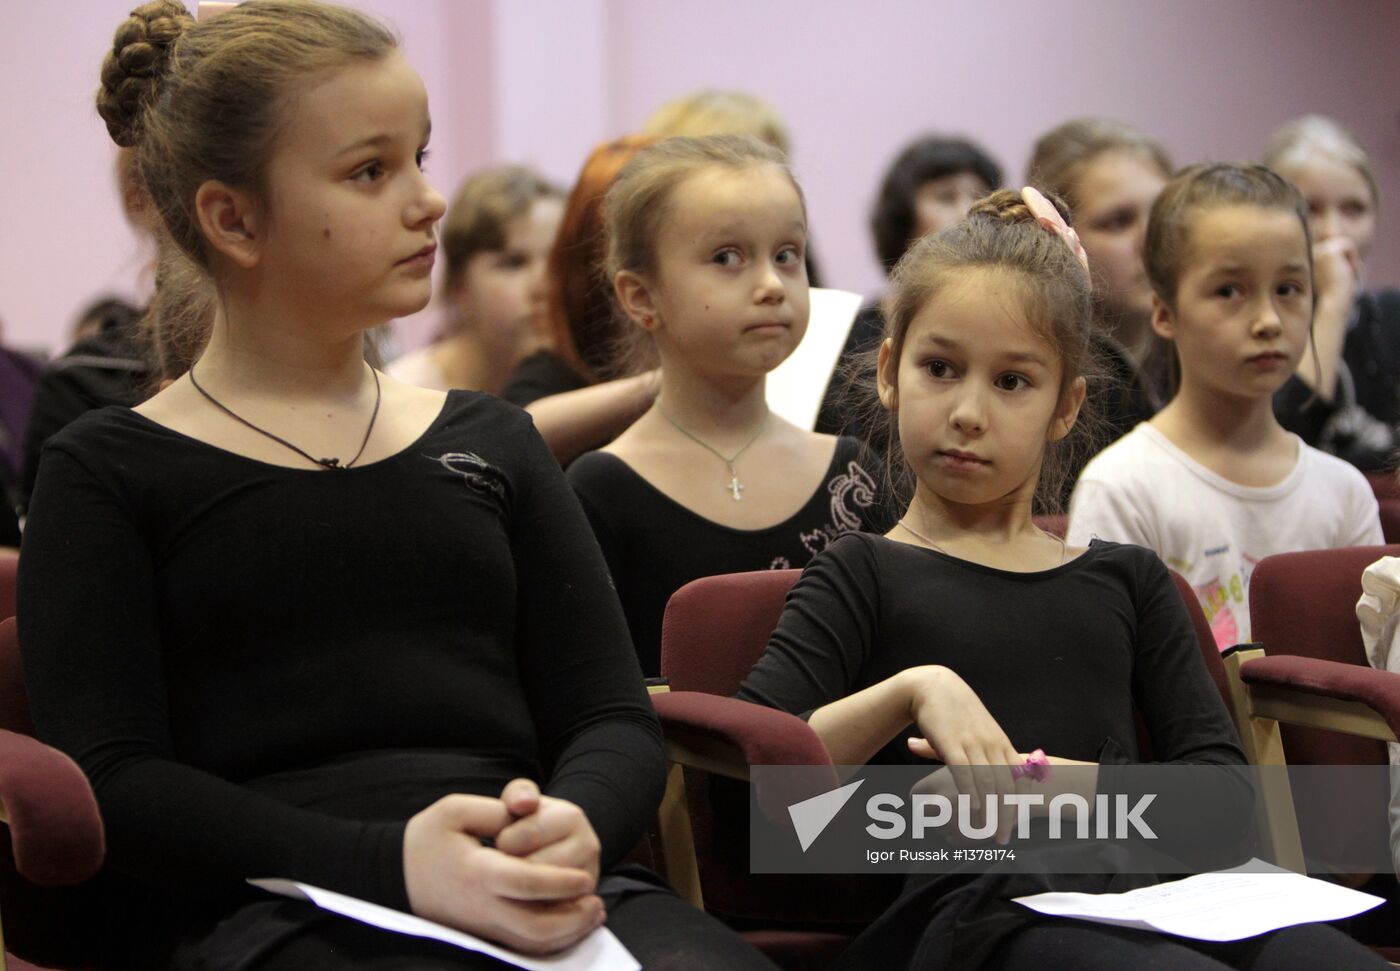 Boris Eifman Ballet School screens young candidates